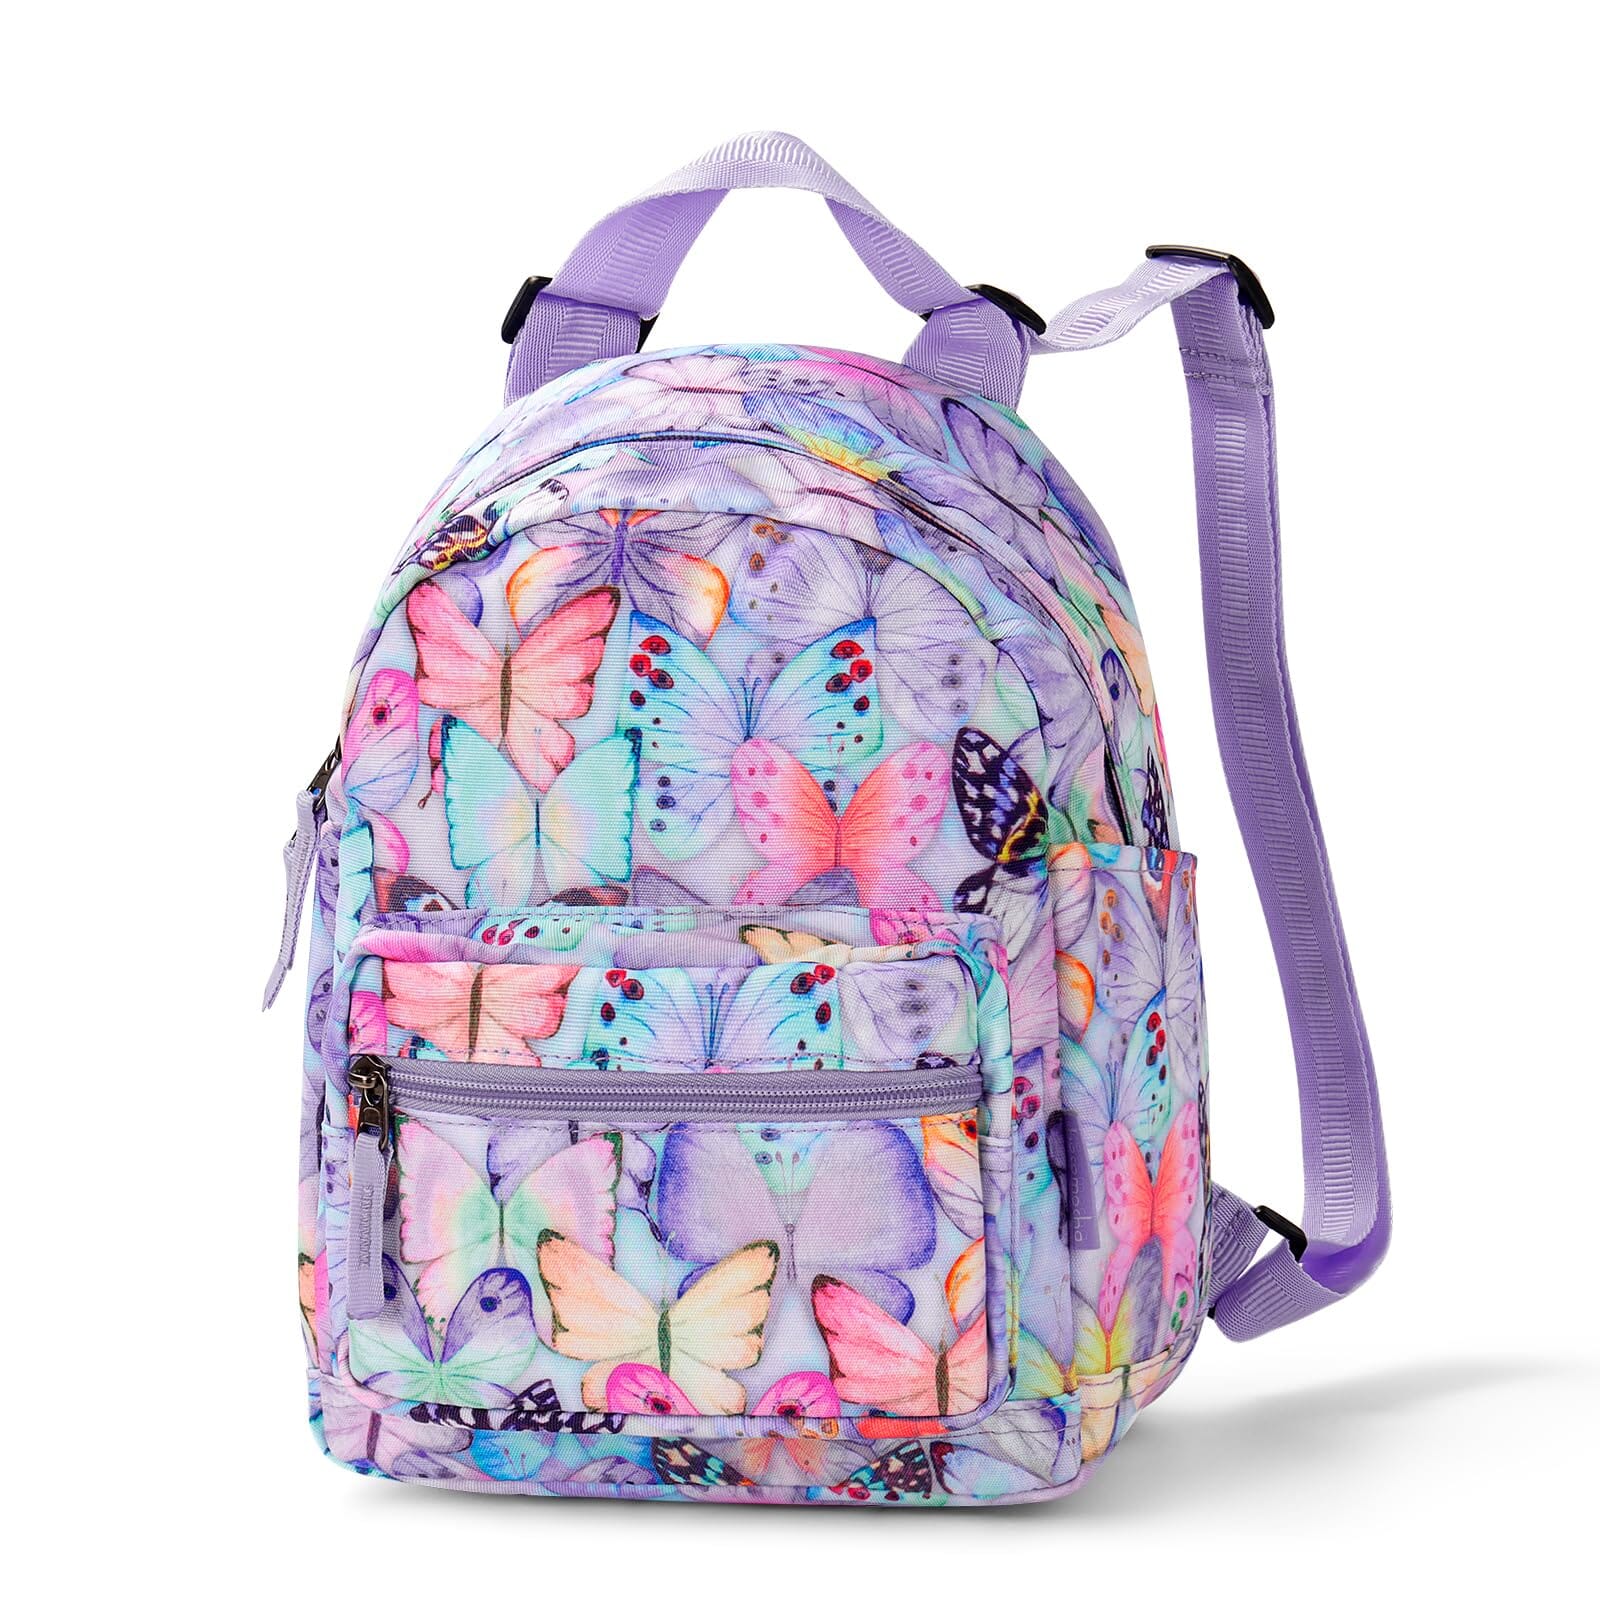 Choco Mocha Butterfly Small Backpack for Girls and Women Teen, Kids Mini Backpack Purse Cute Little Girls Backpack School Travel Bookbag chocomochakids 